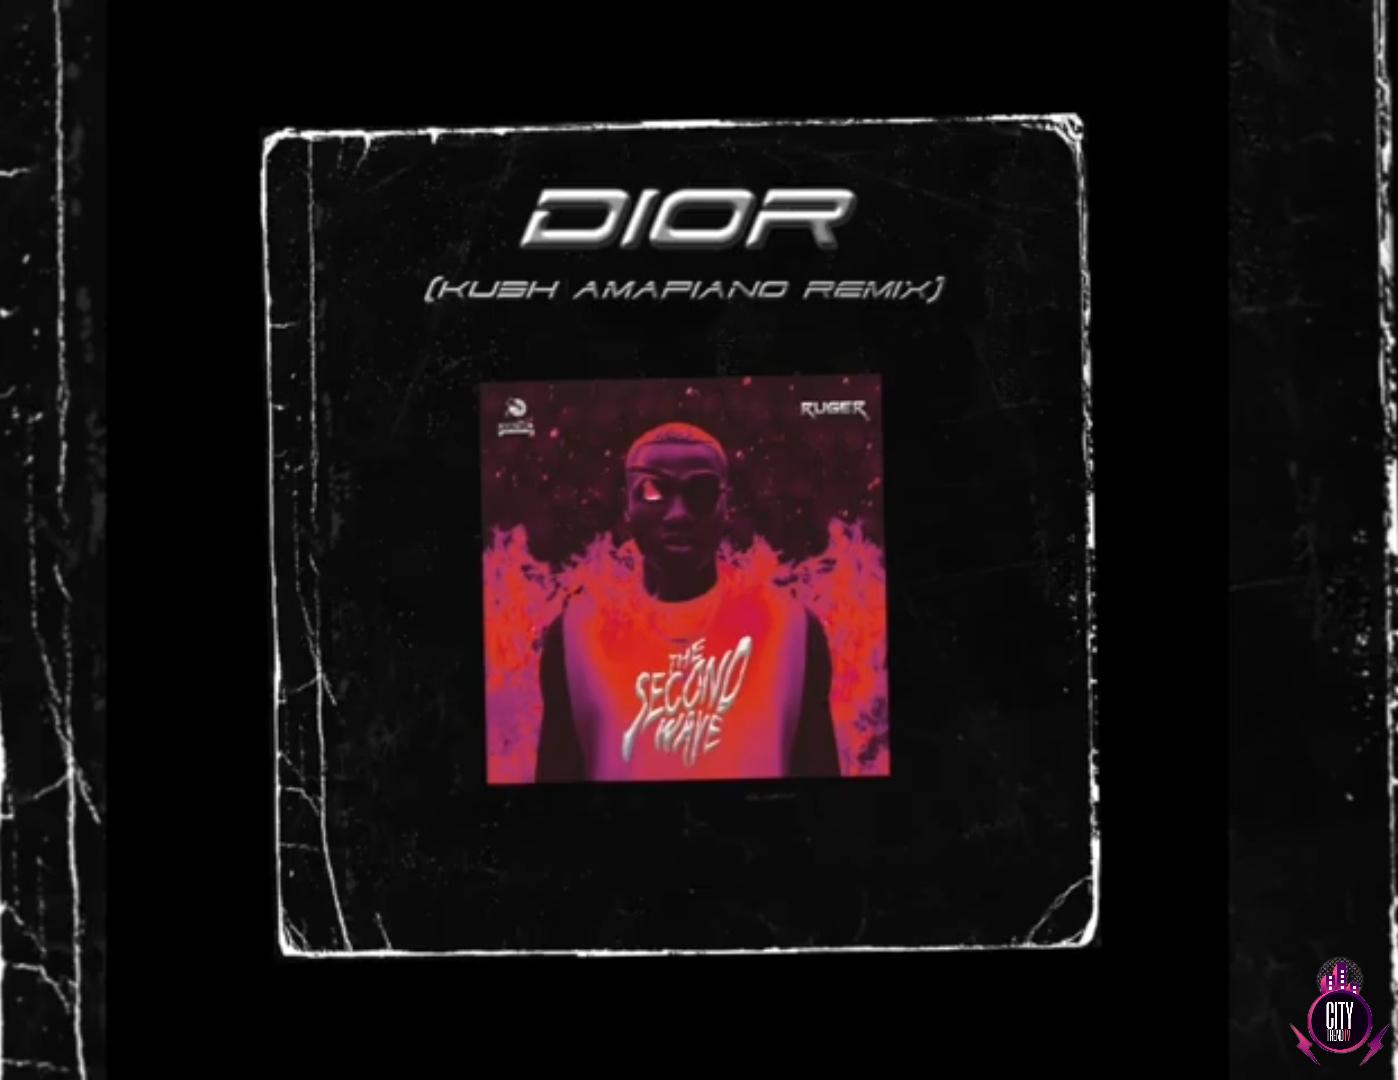 Ruger DJ Kush — Dior KU3H Amapiano Remix